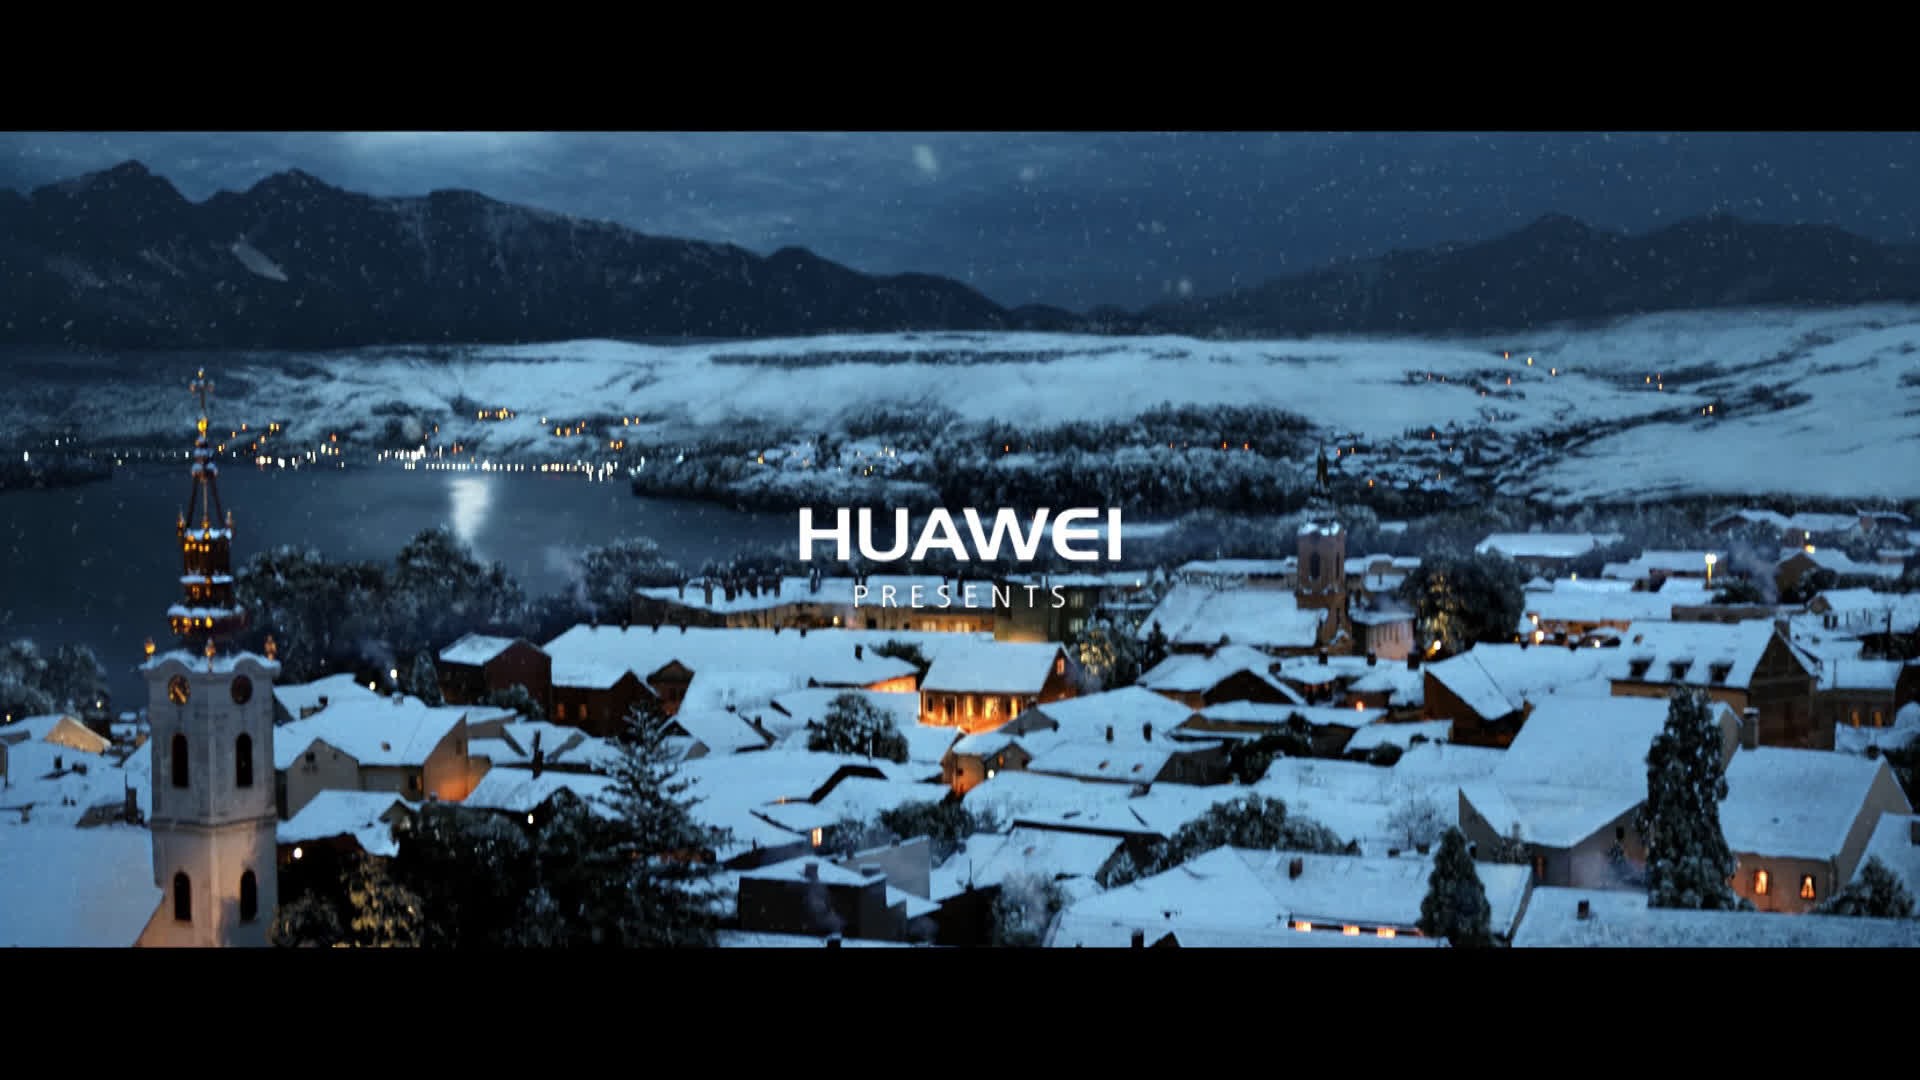 Huawei #BePresent